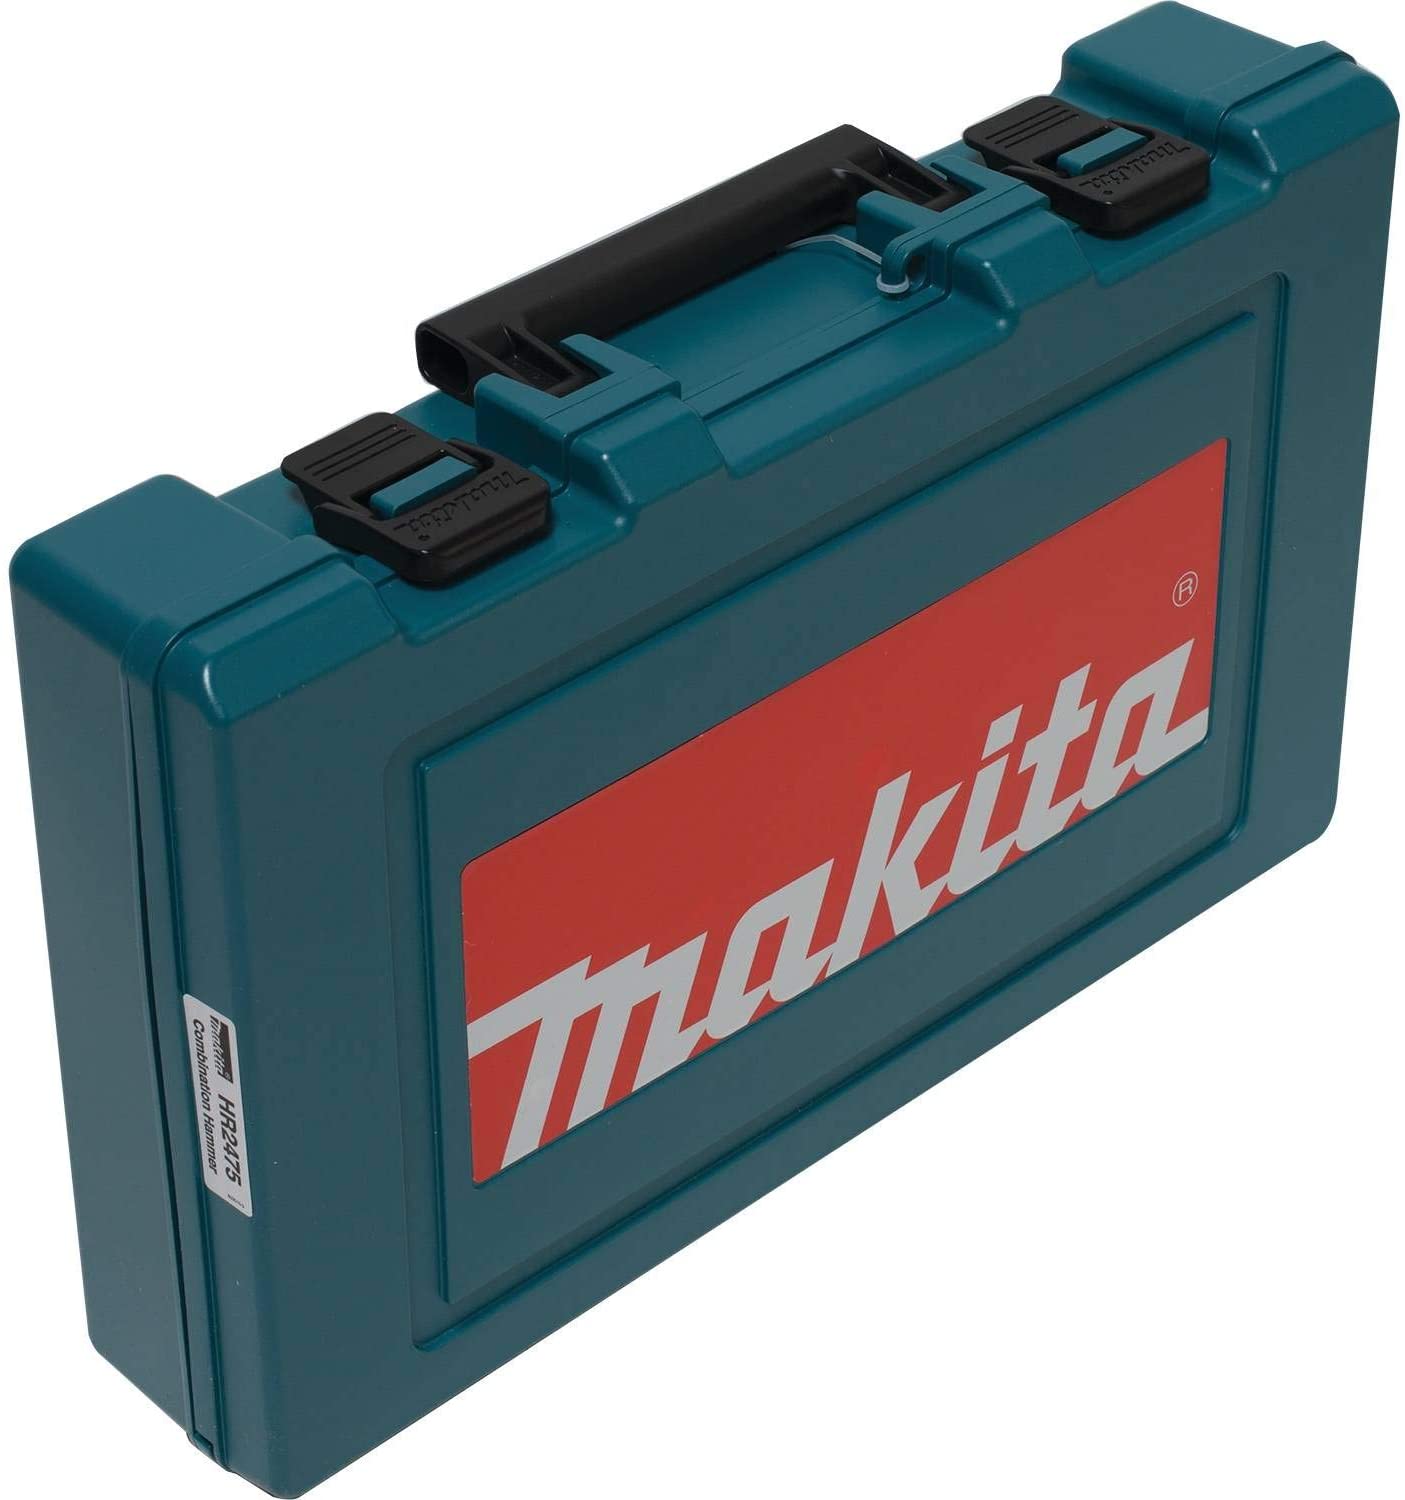 Makita Rotary Hammer Frill HR2475 Power Tool Services